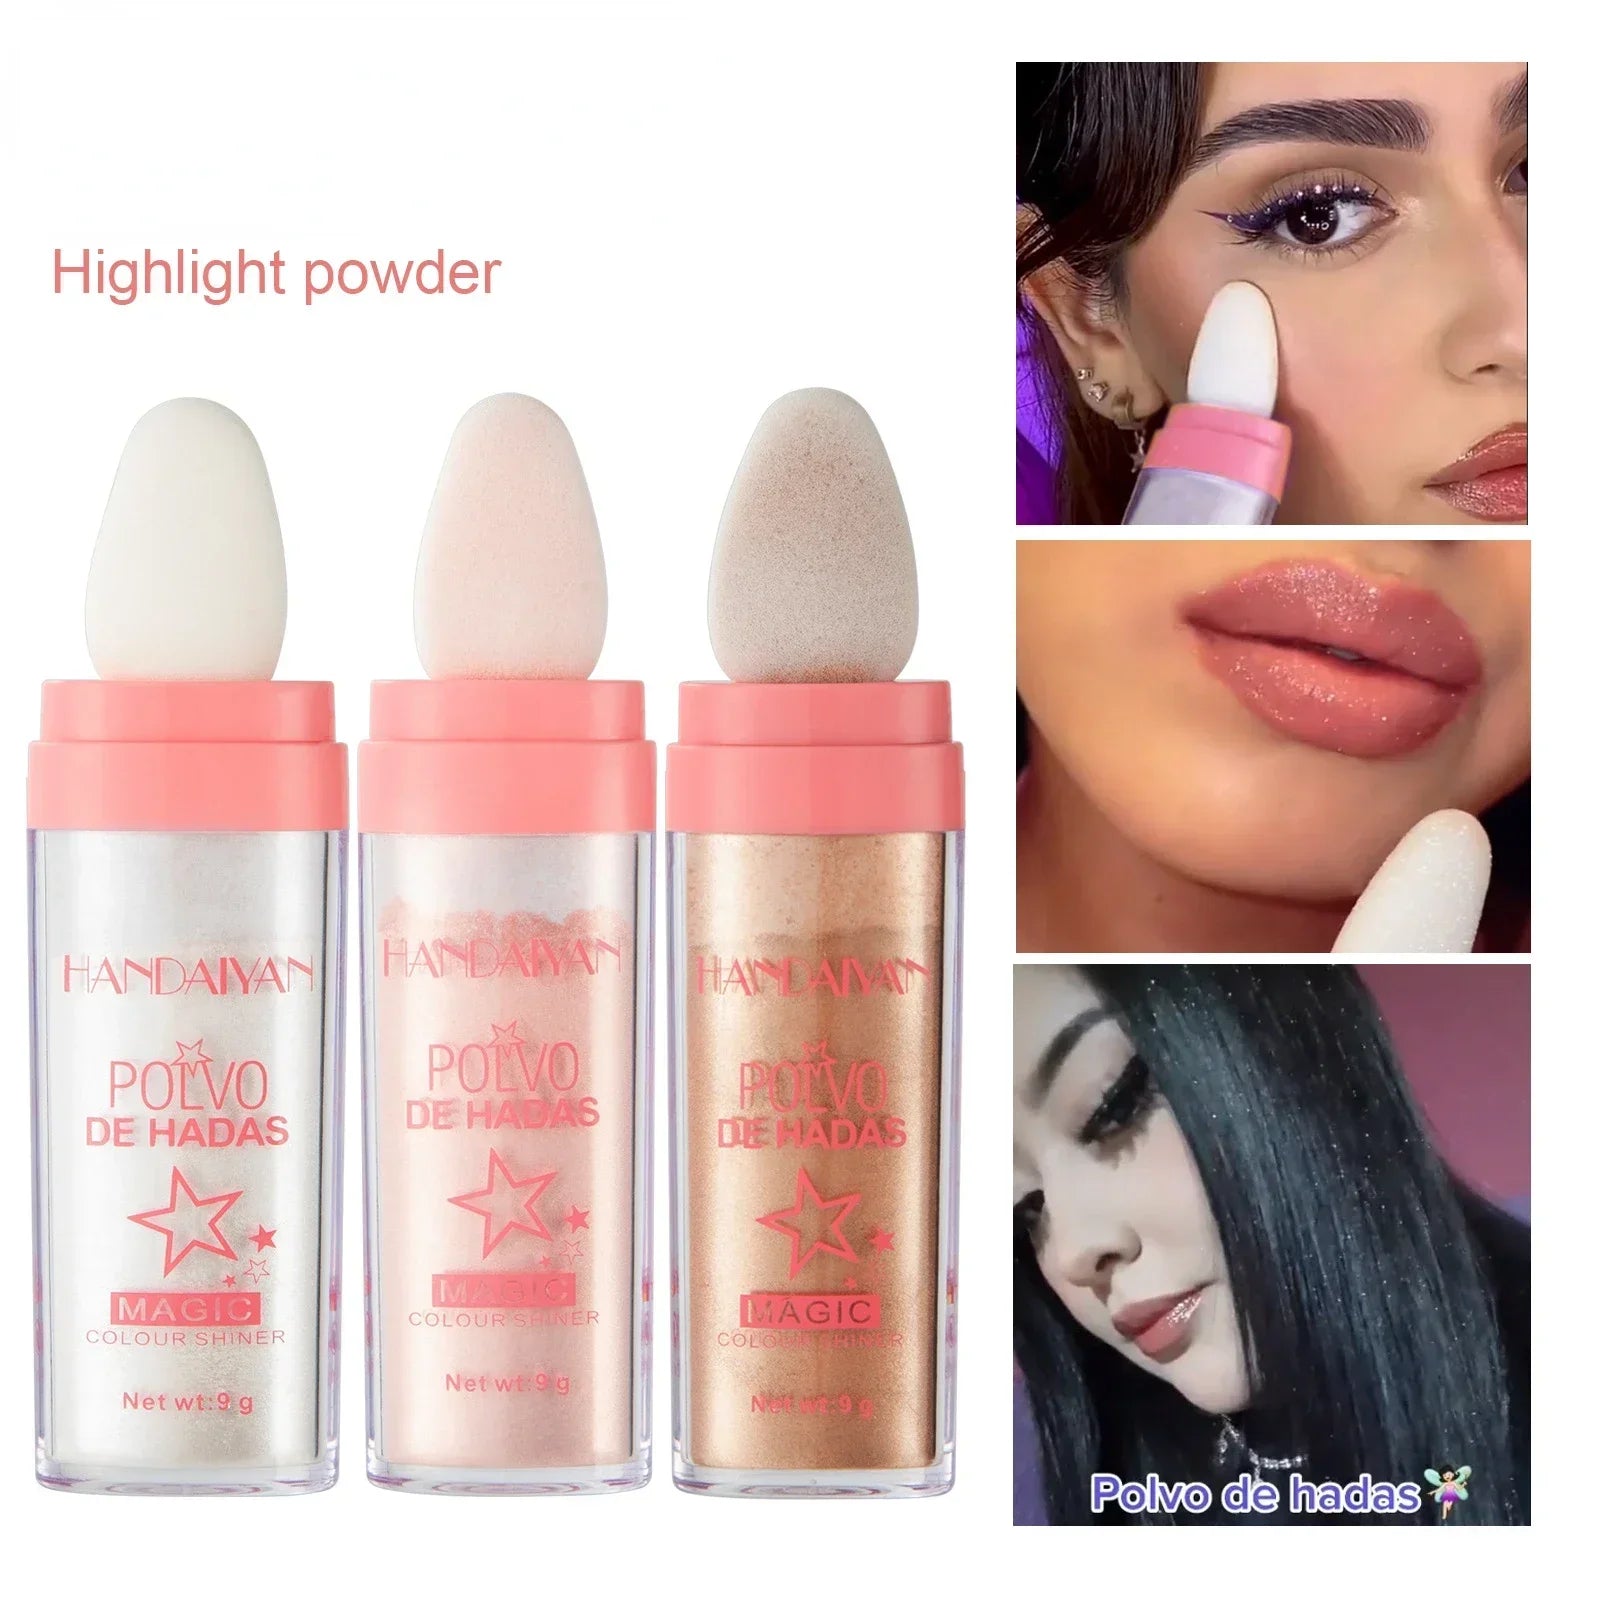 Glitter Highlighter Powder High Gloss Illuminating Powder Professional Face Makeup Eyeshadow Lips Shimmering Hair Body Make Up